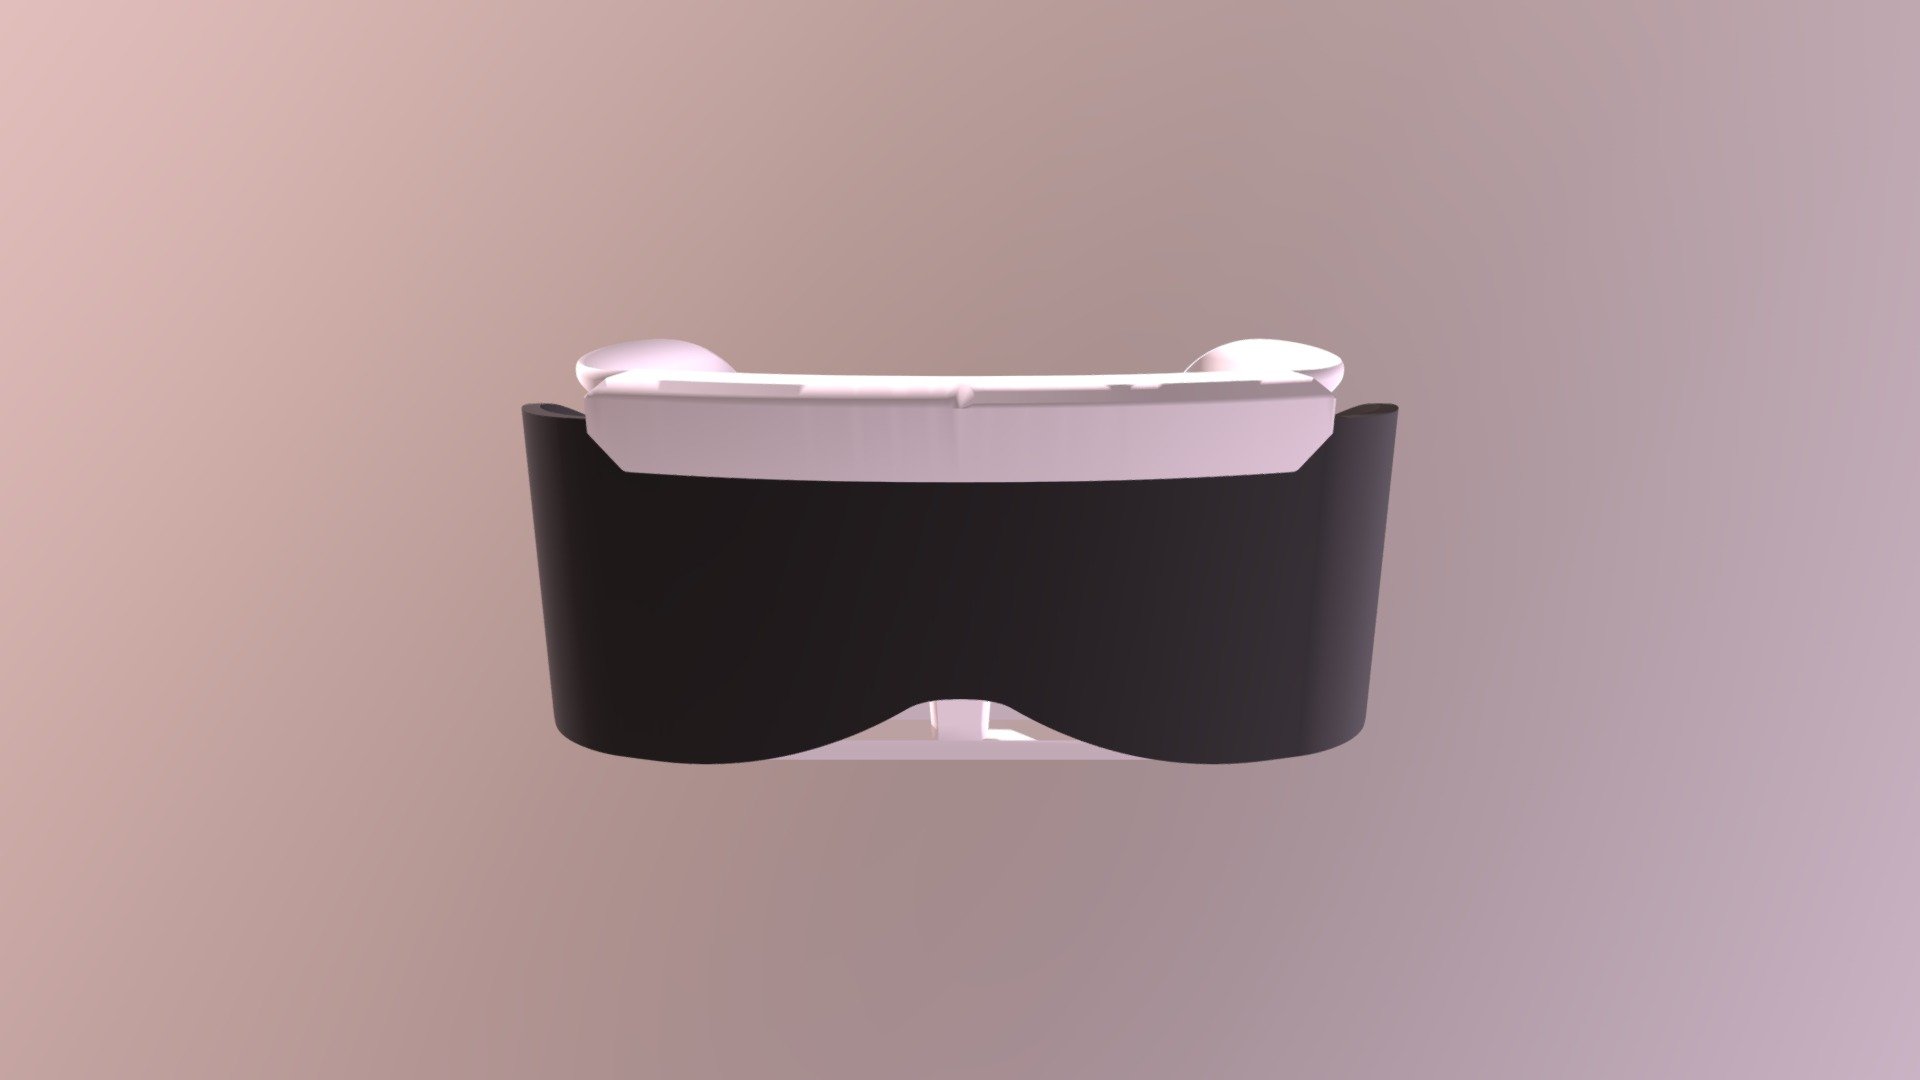 VR For Sketchfab - 3D model by elenparry [7537c4a] - Sketchfab